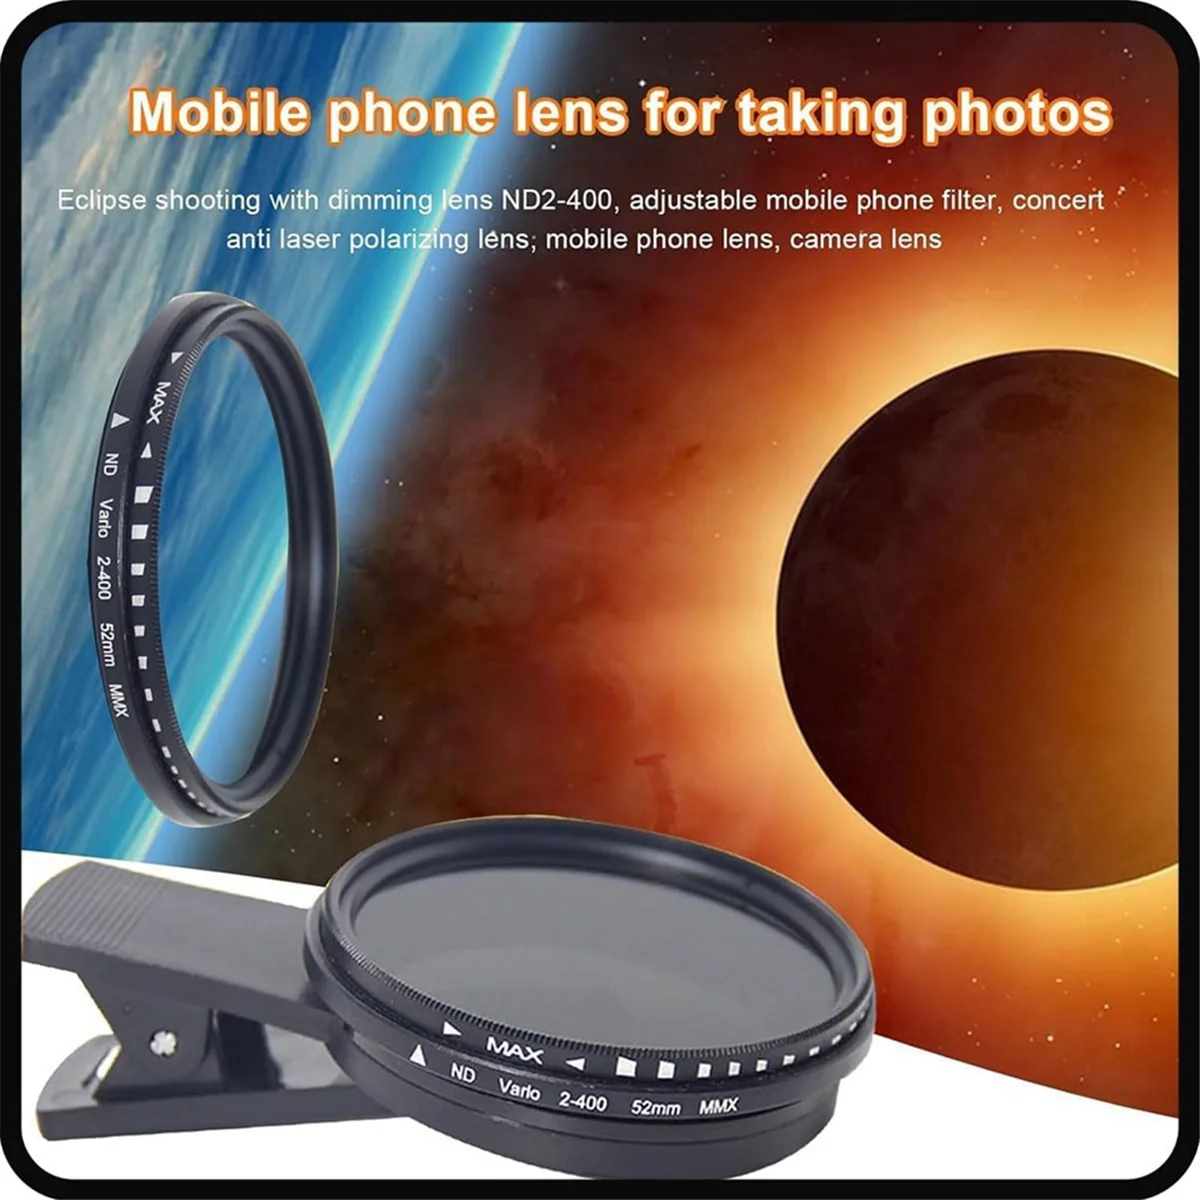 

1 Set Solar Eclipse Phone Filter 52mm Camera Lens Filter ND 2-400 Smartphone Lens Filter with Clip Lens Cap